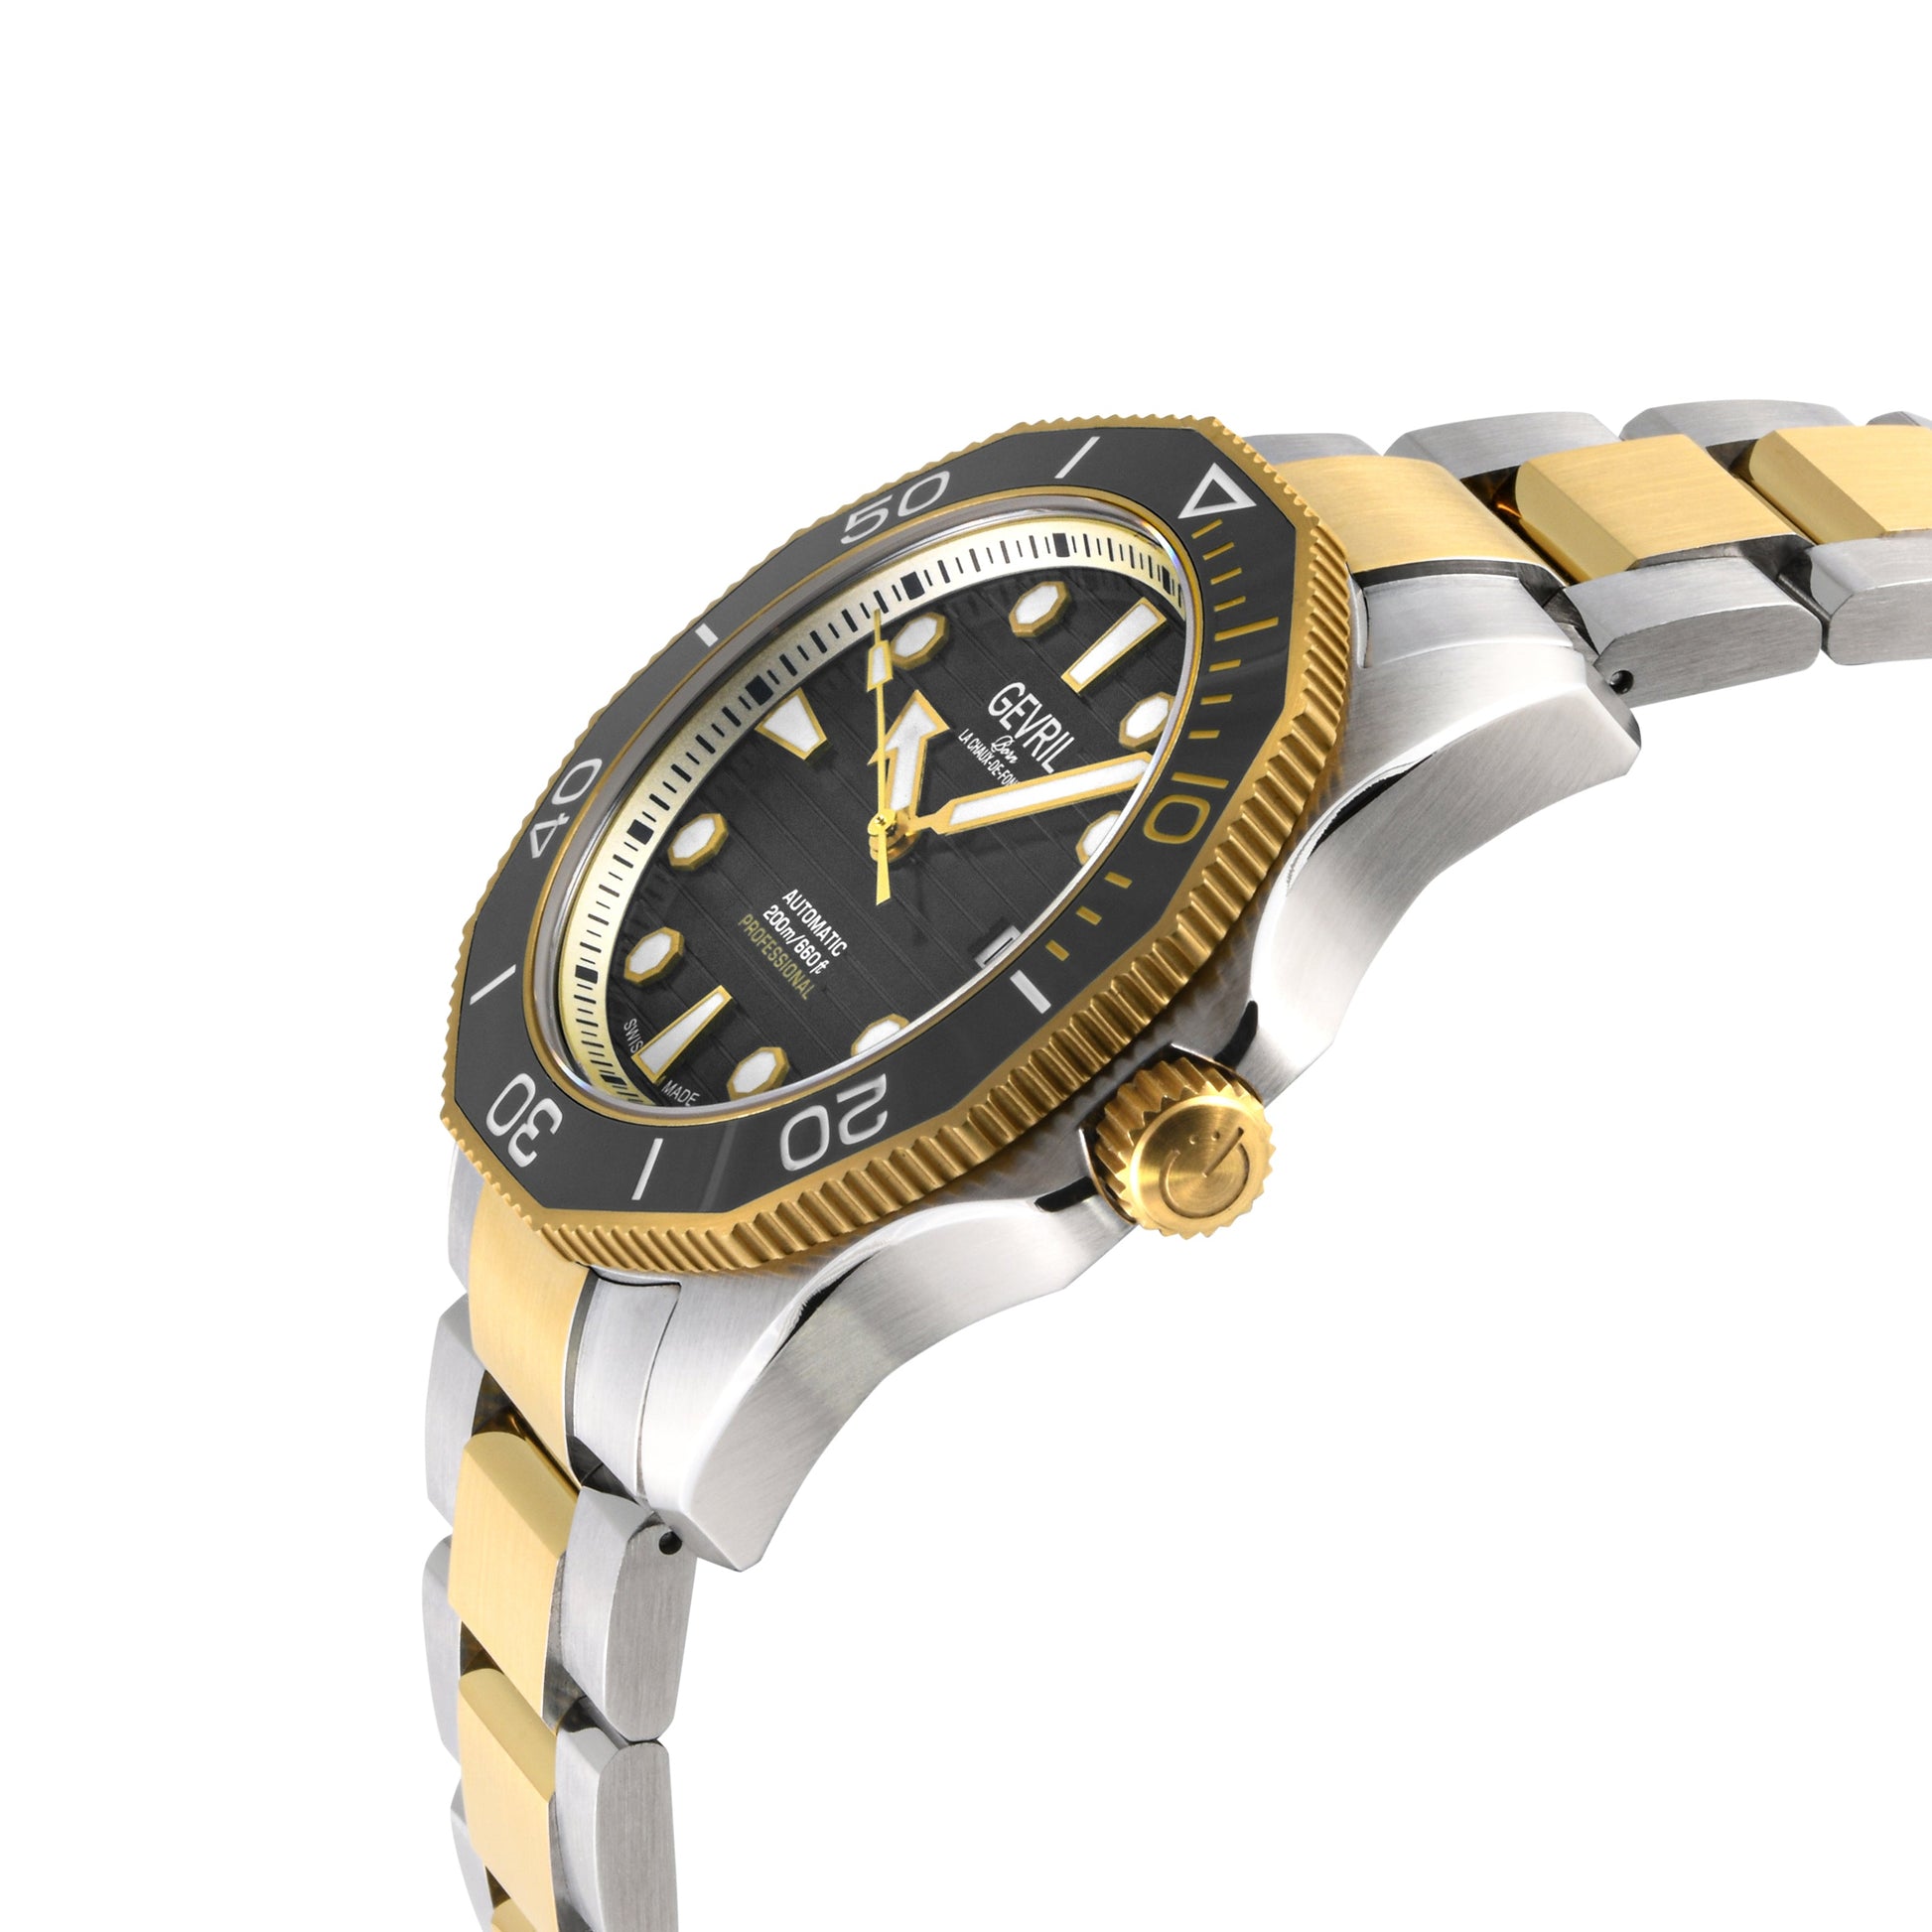 Gevril-Luxury-Swiss-Watches-Gevril Pier 90-49102